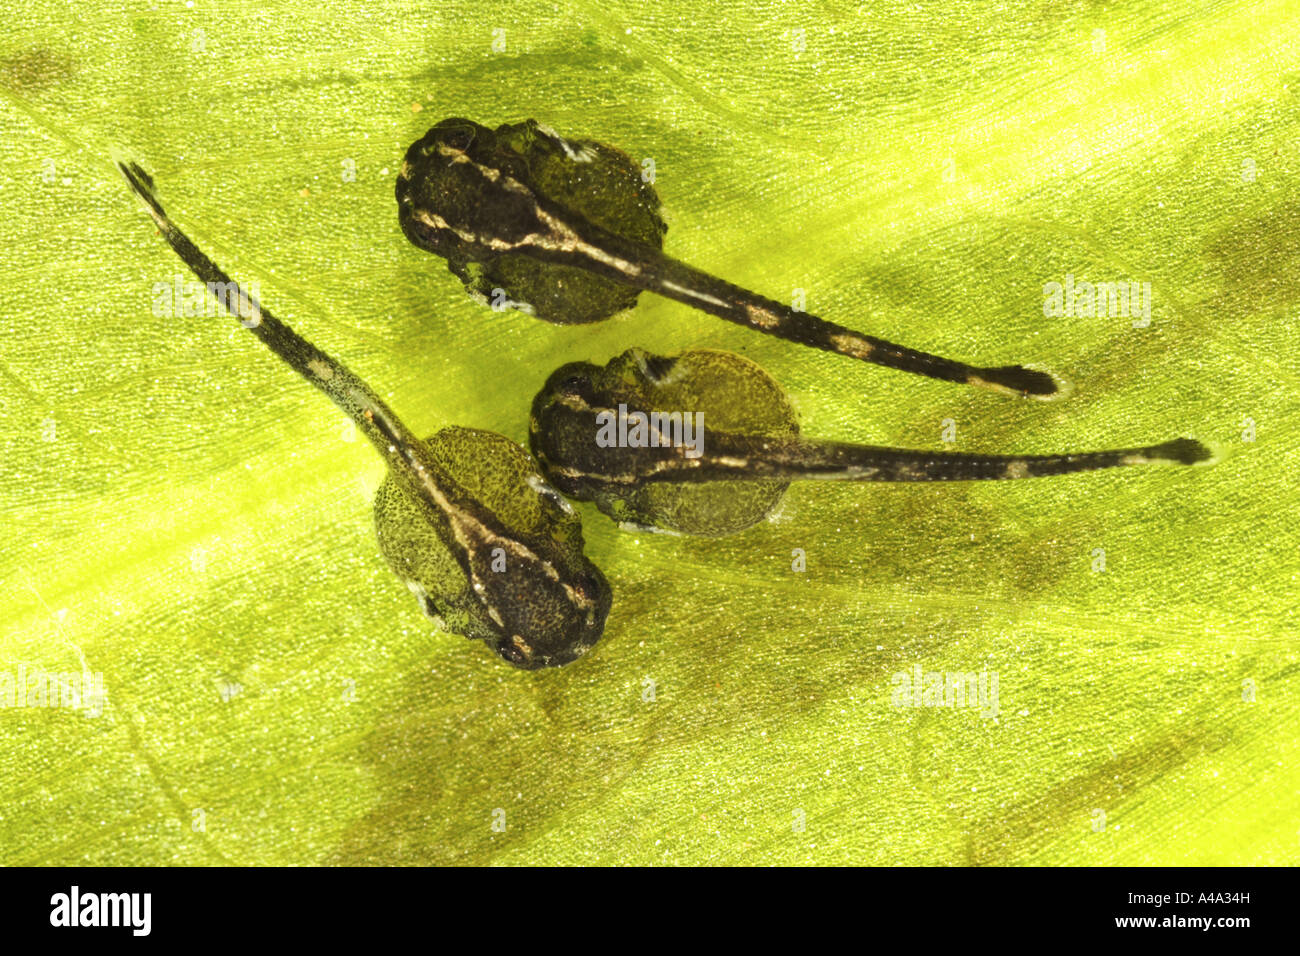 larvae on Echinodorus after hatching Sturisoma festivum Stock Photo